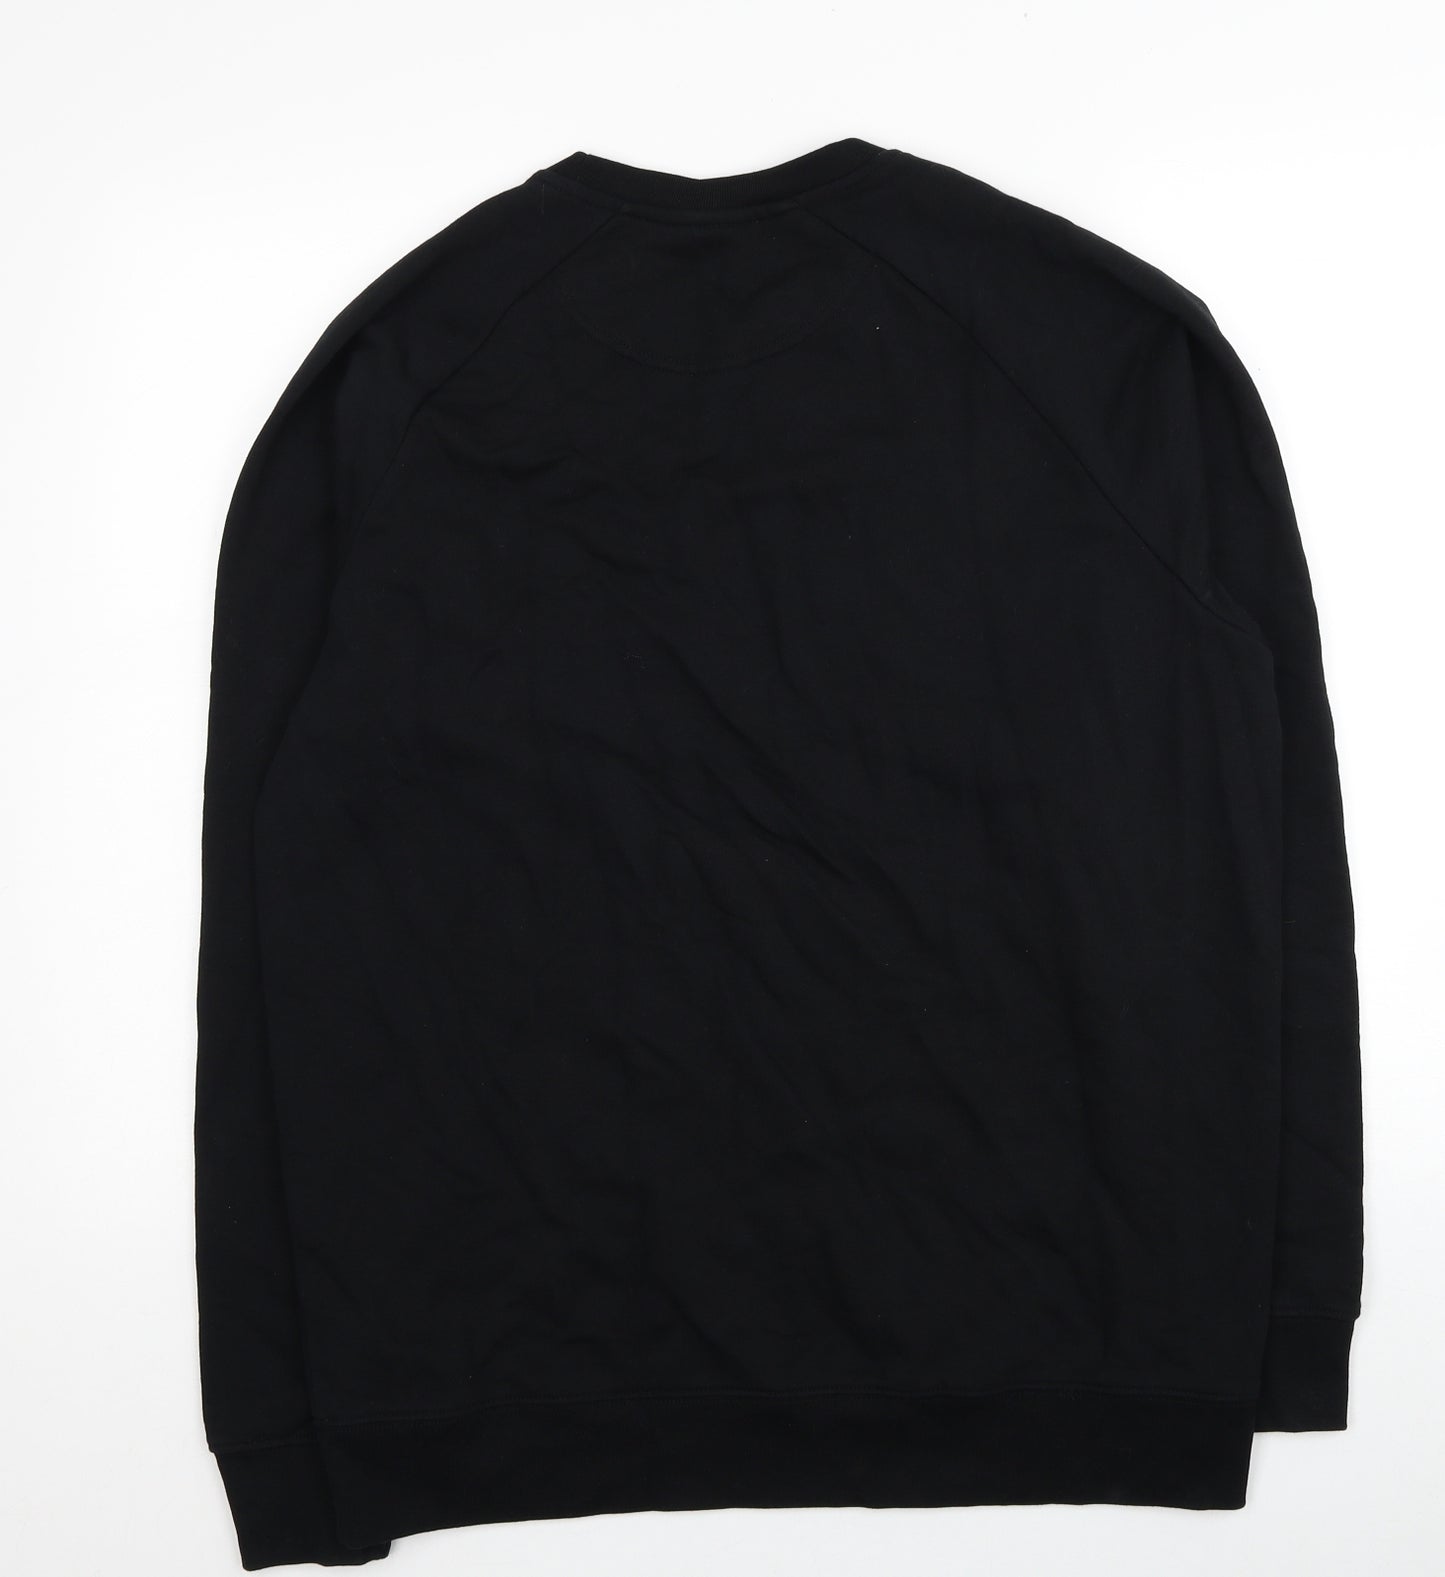 So Energy Mens Black Cotton Pullover Sweatshirt Size XL - Unisex